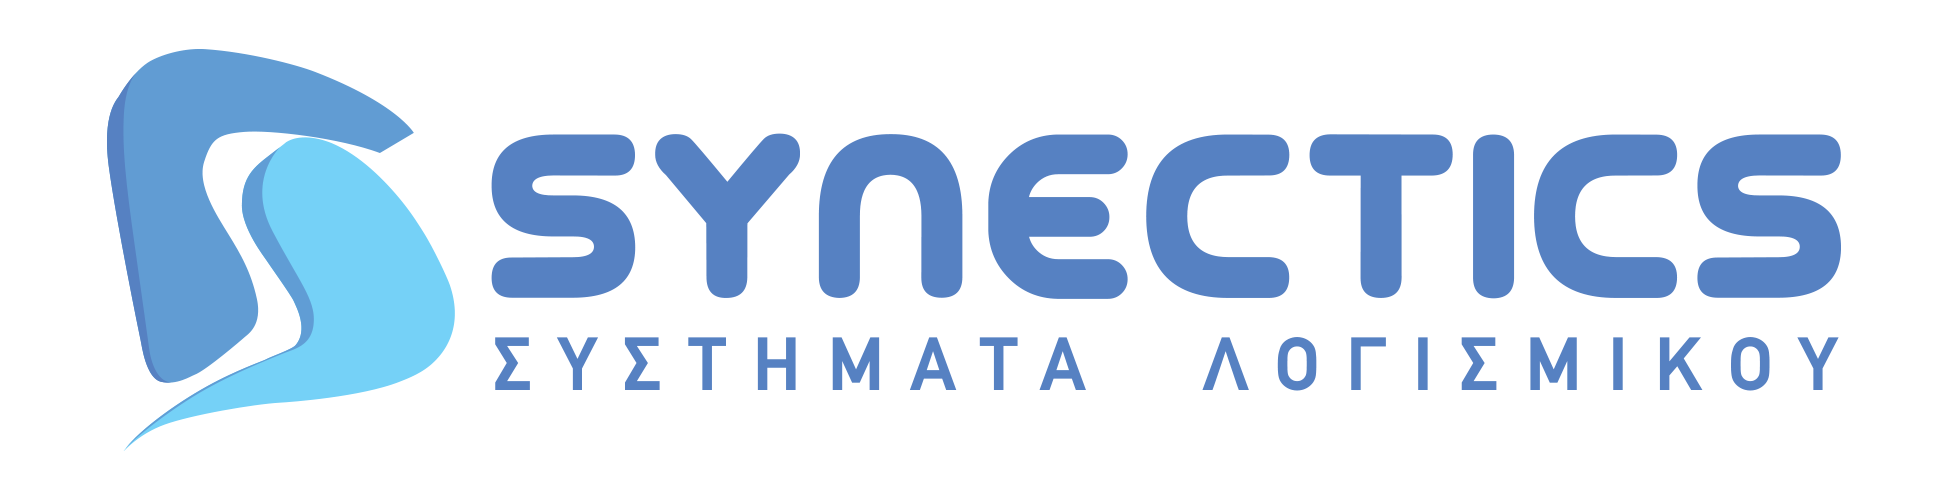 Synectics logo big